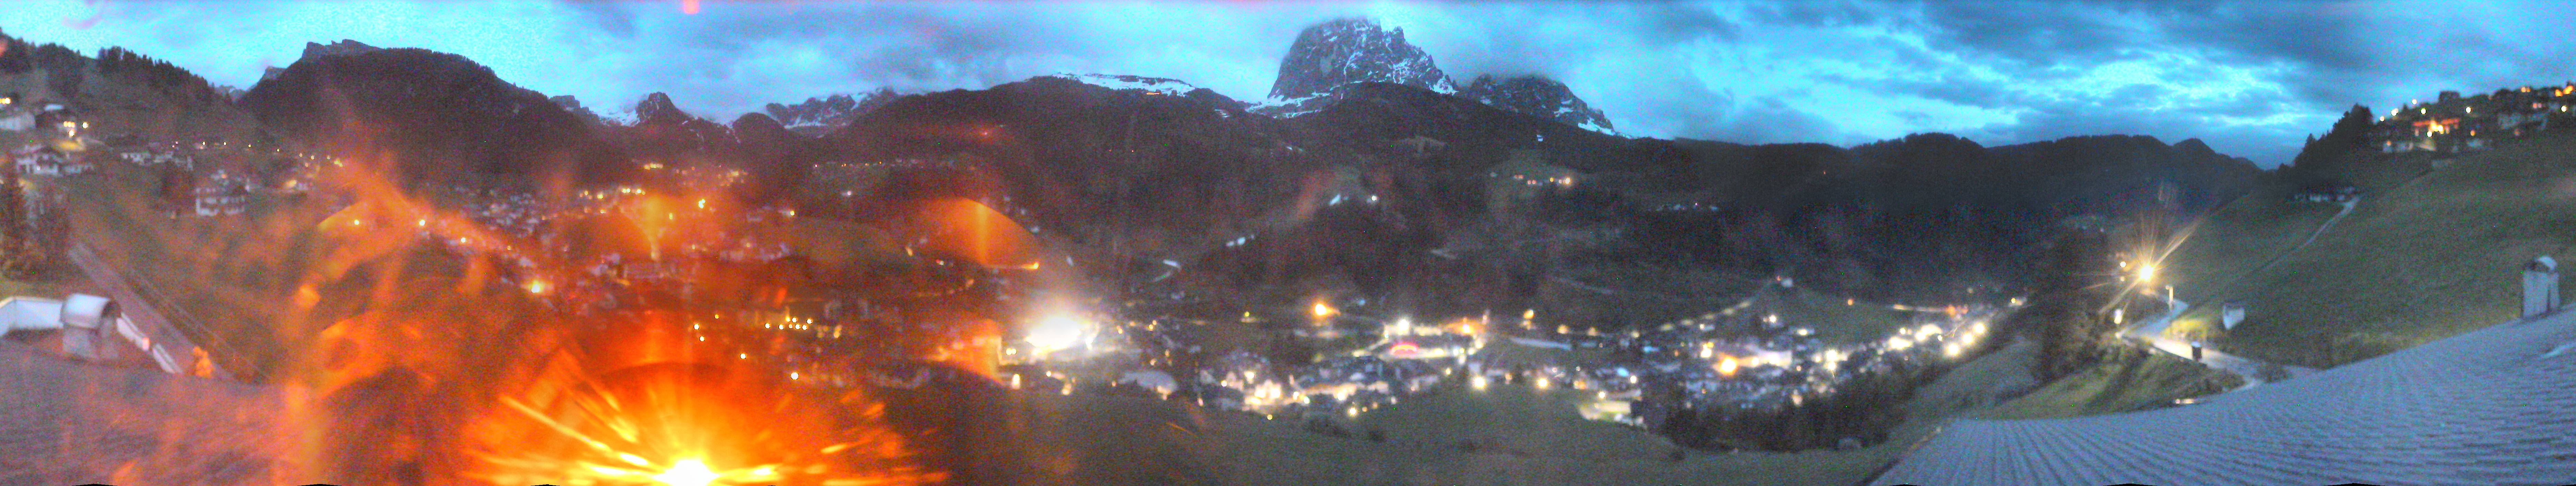 Val Gardena St. Cristina village webcam 